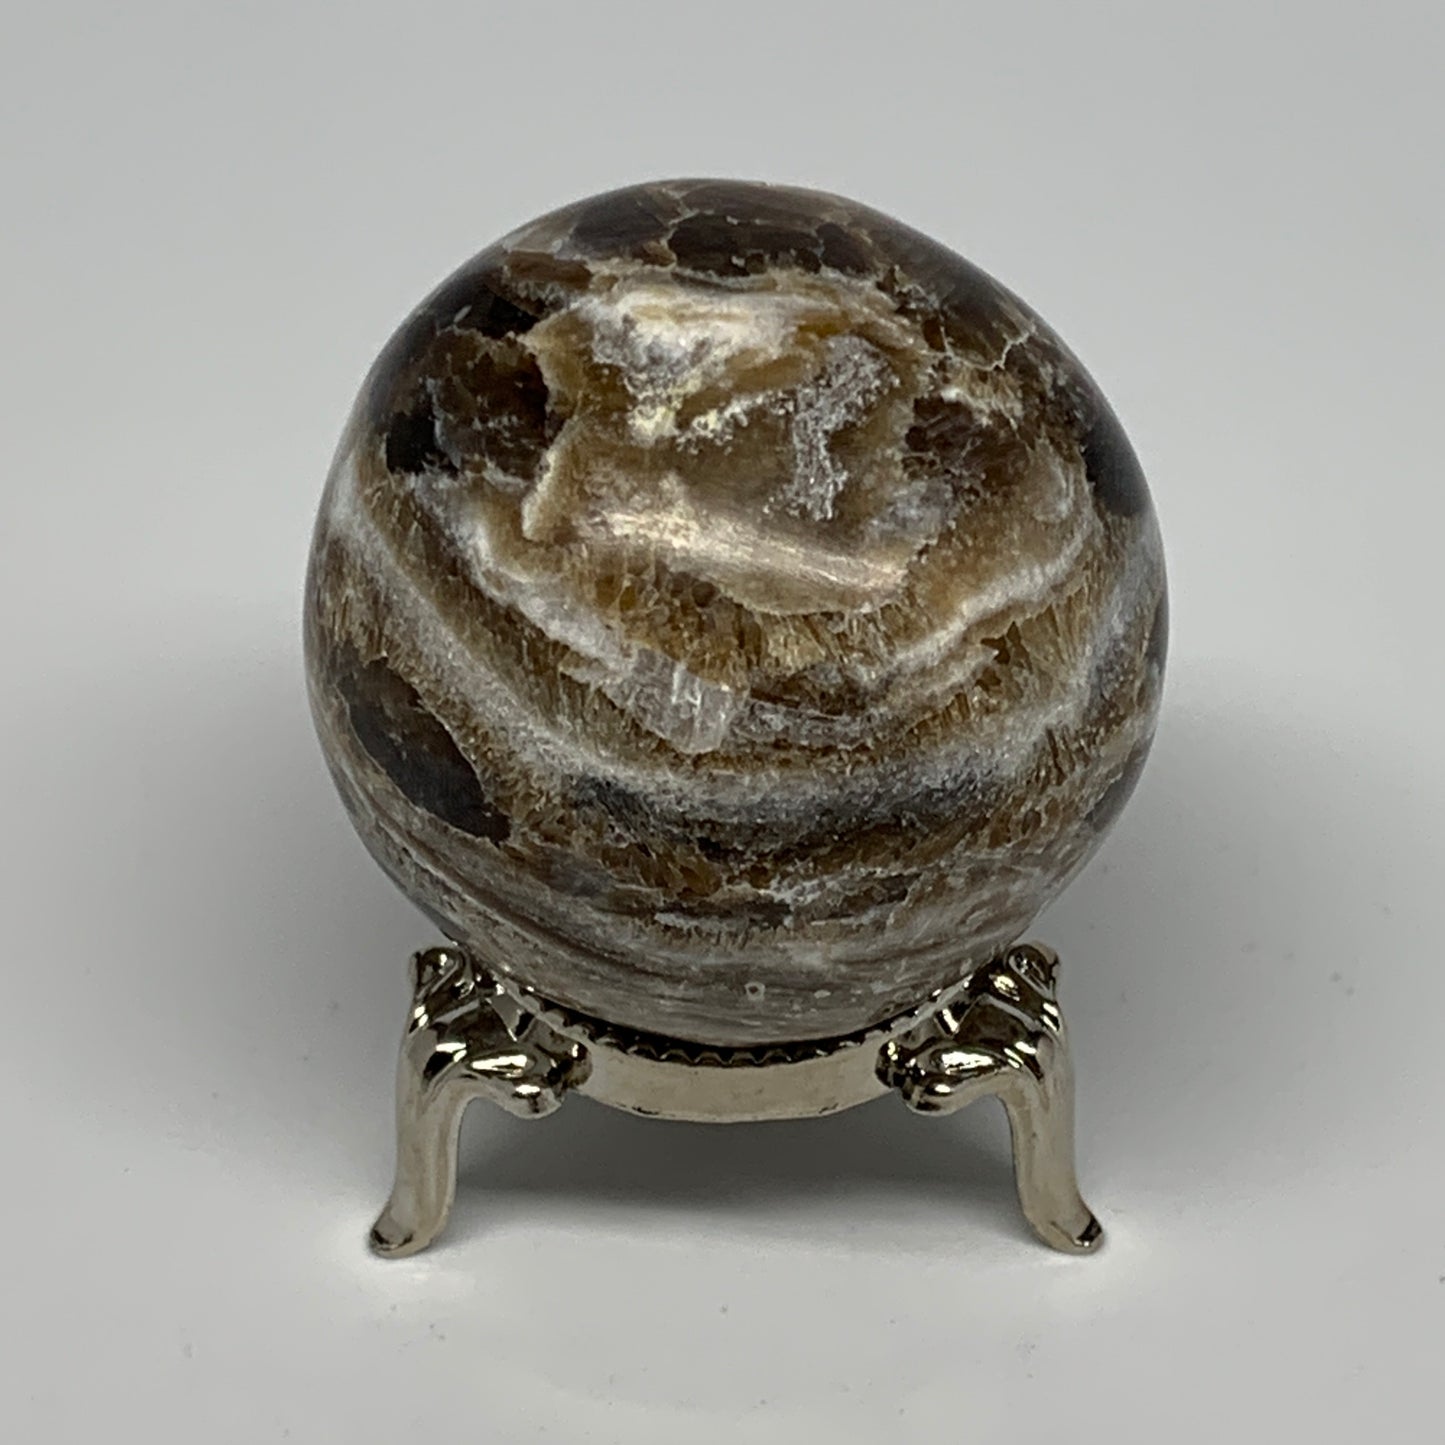 125.1g, 1.9" (47mm), Chocolate/Gray Onyx Sphere Ball Gemstone @Morocco, B18927